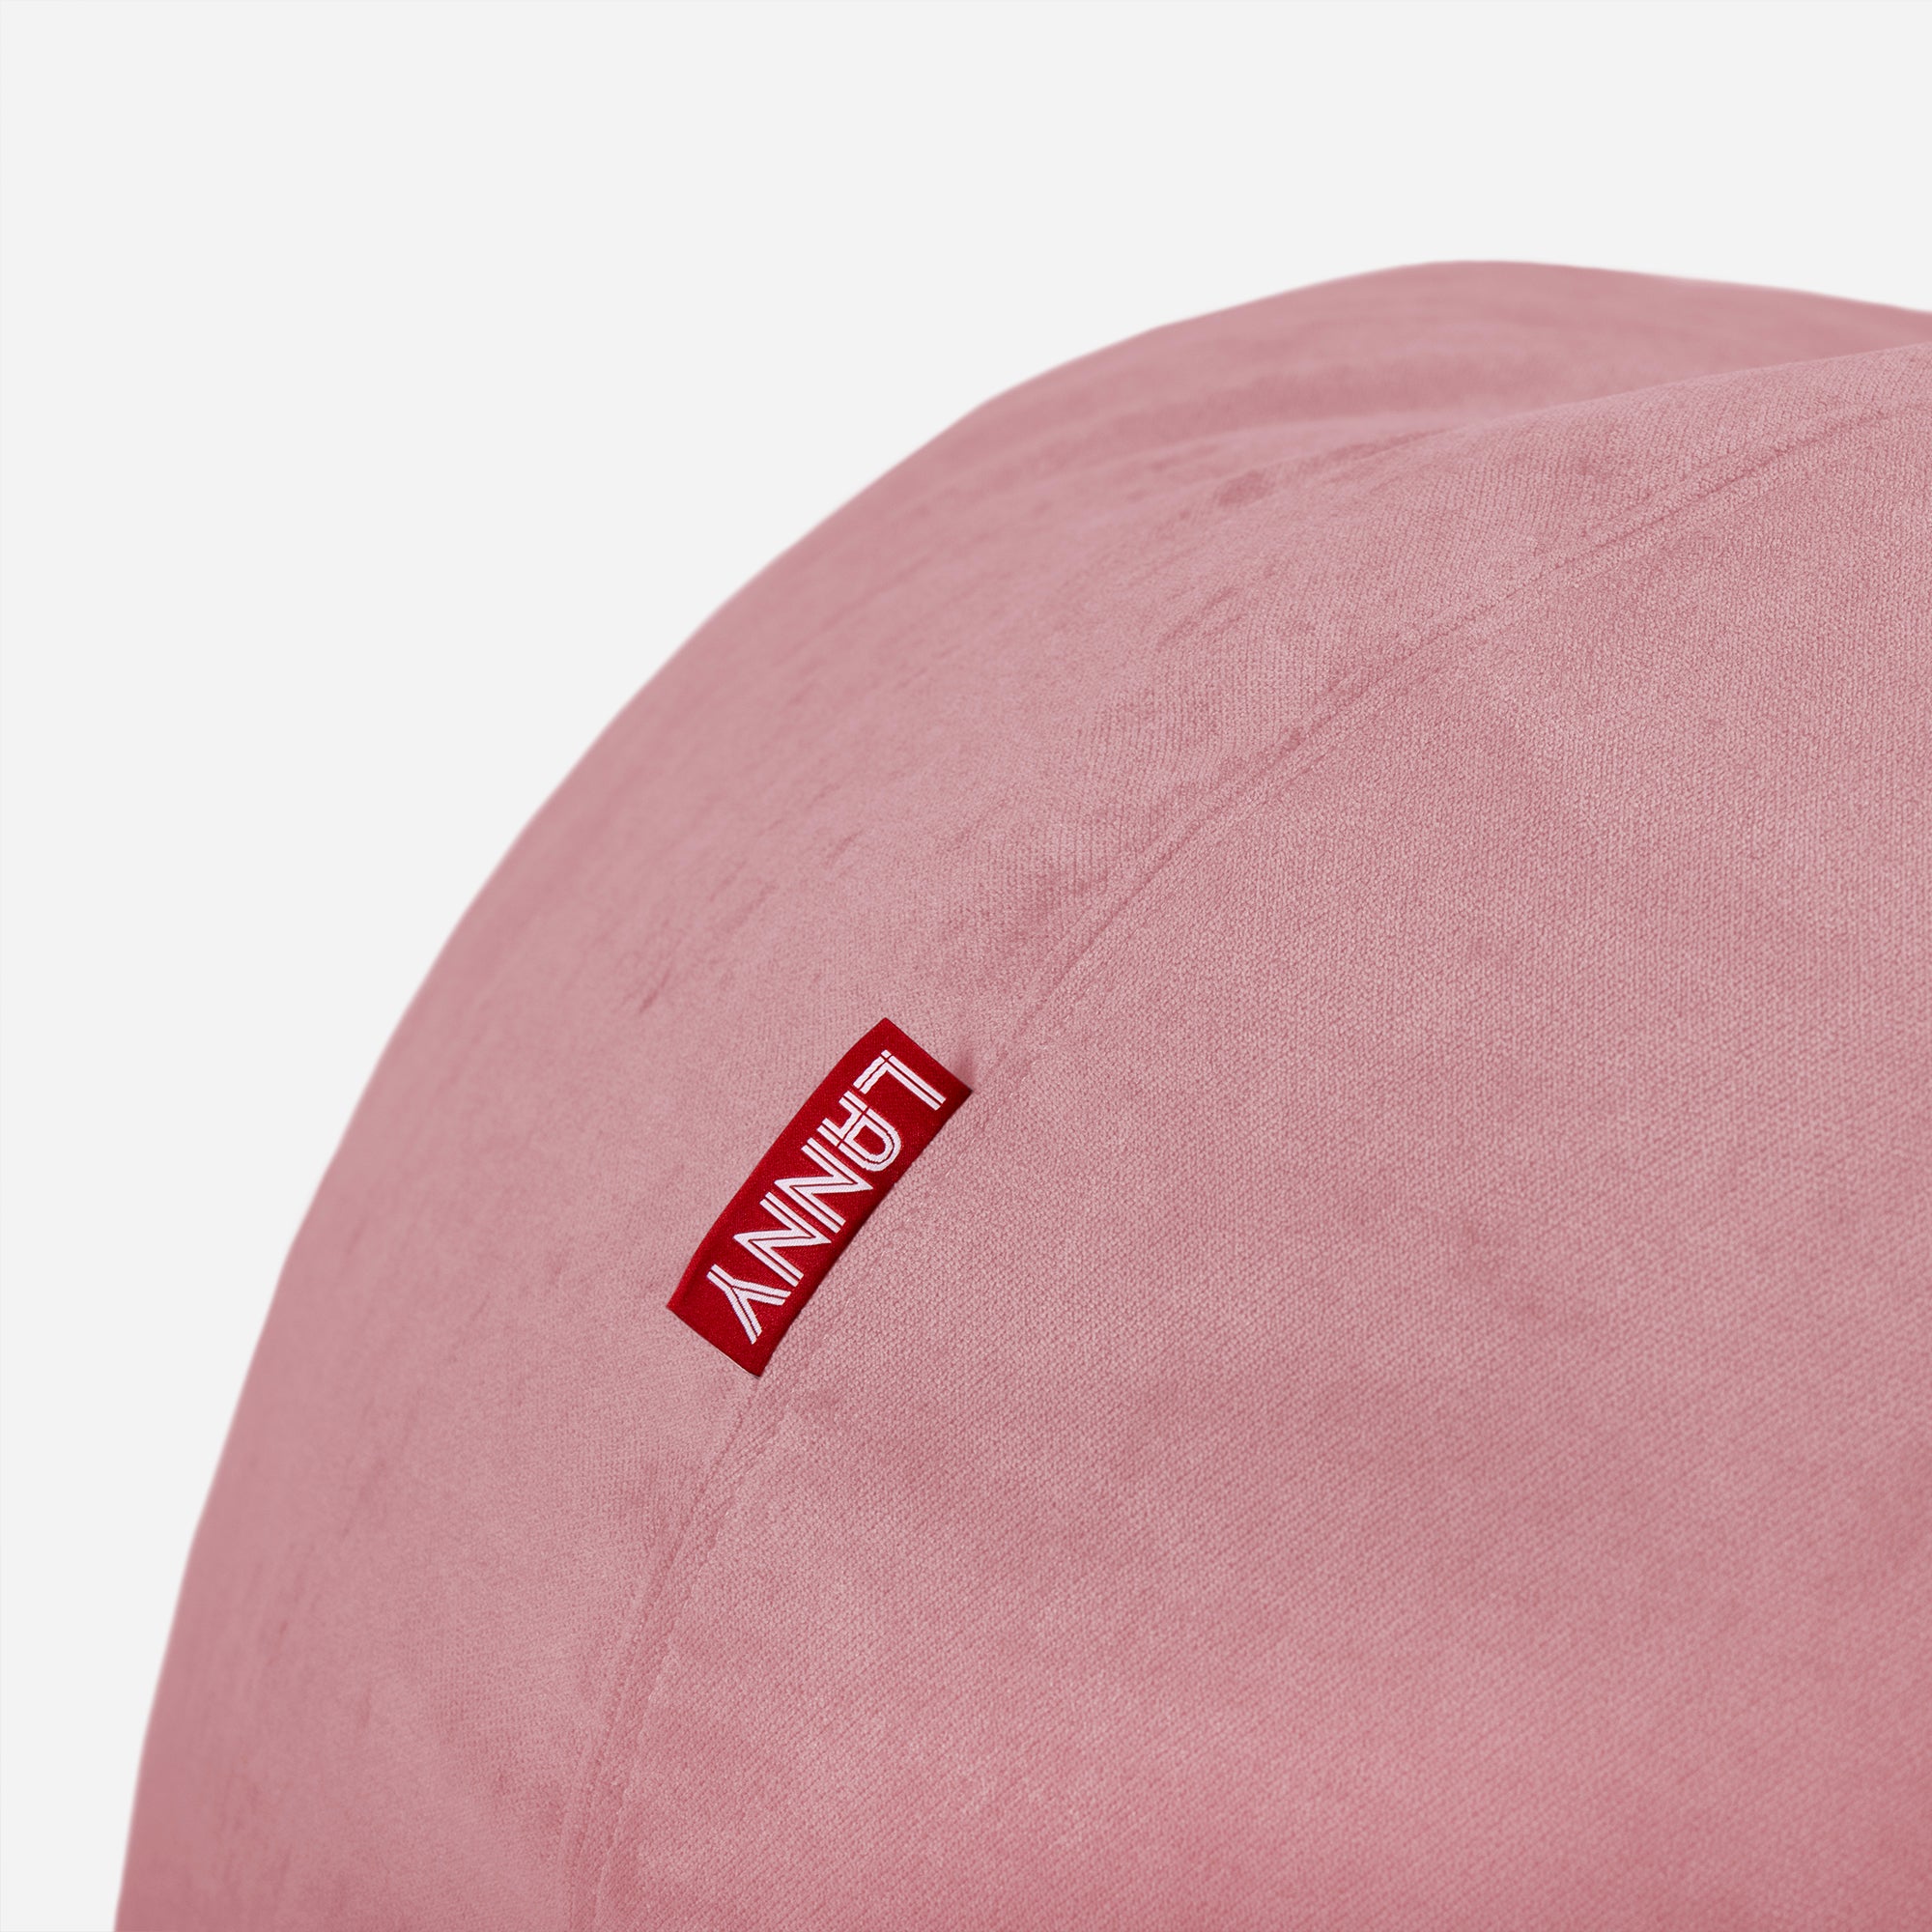 Sphere Aldo Pink Bean bag